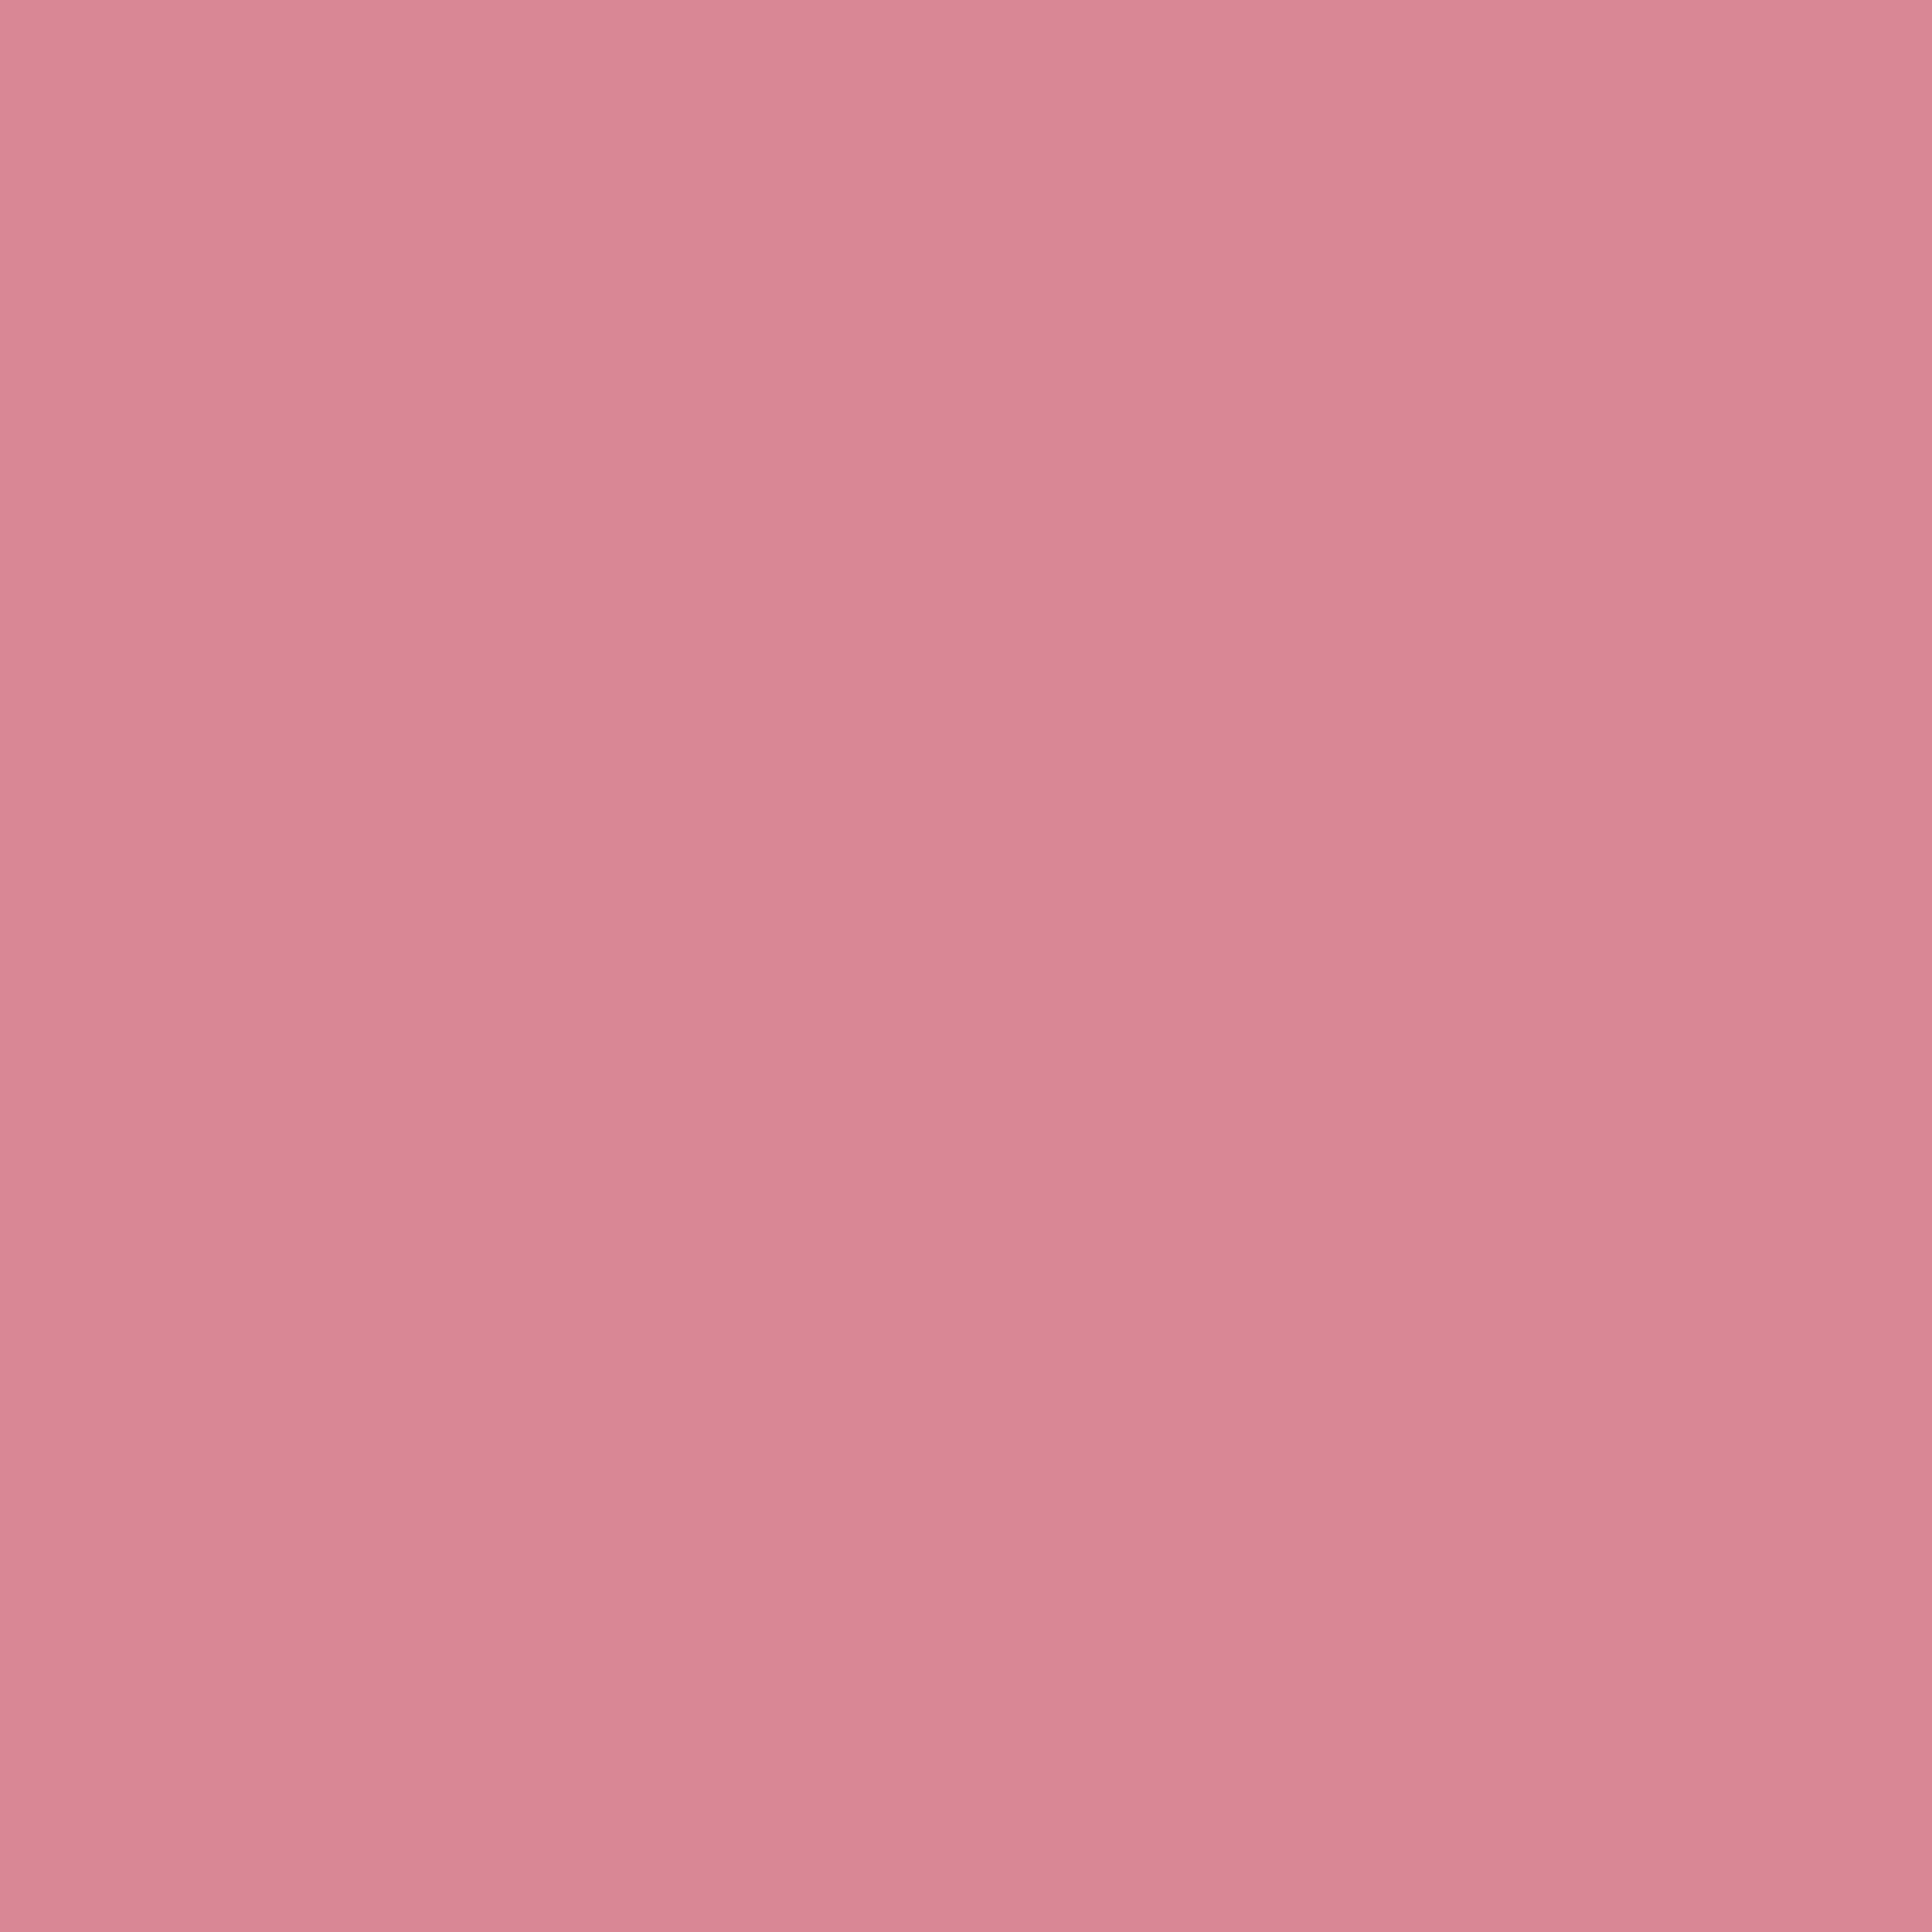 2732x2732 Shimmering Blush Solid Color Background